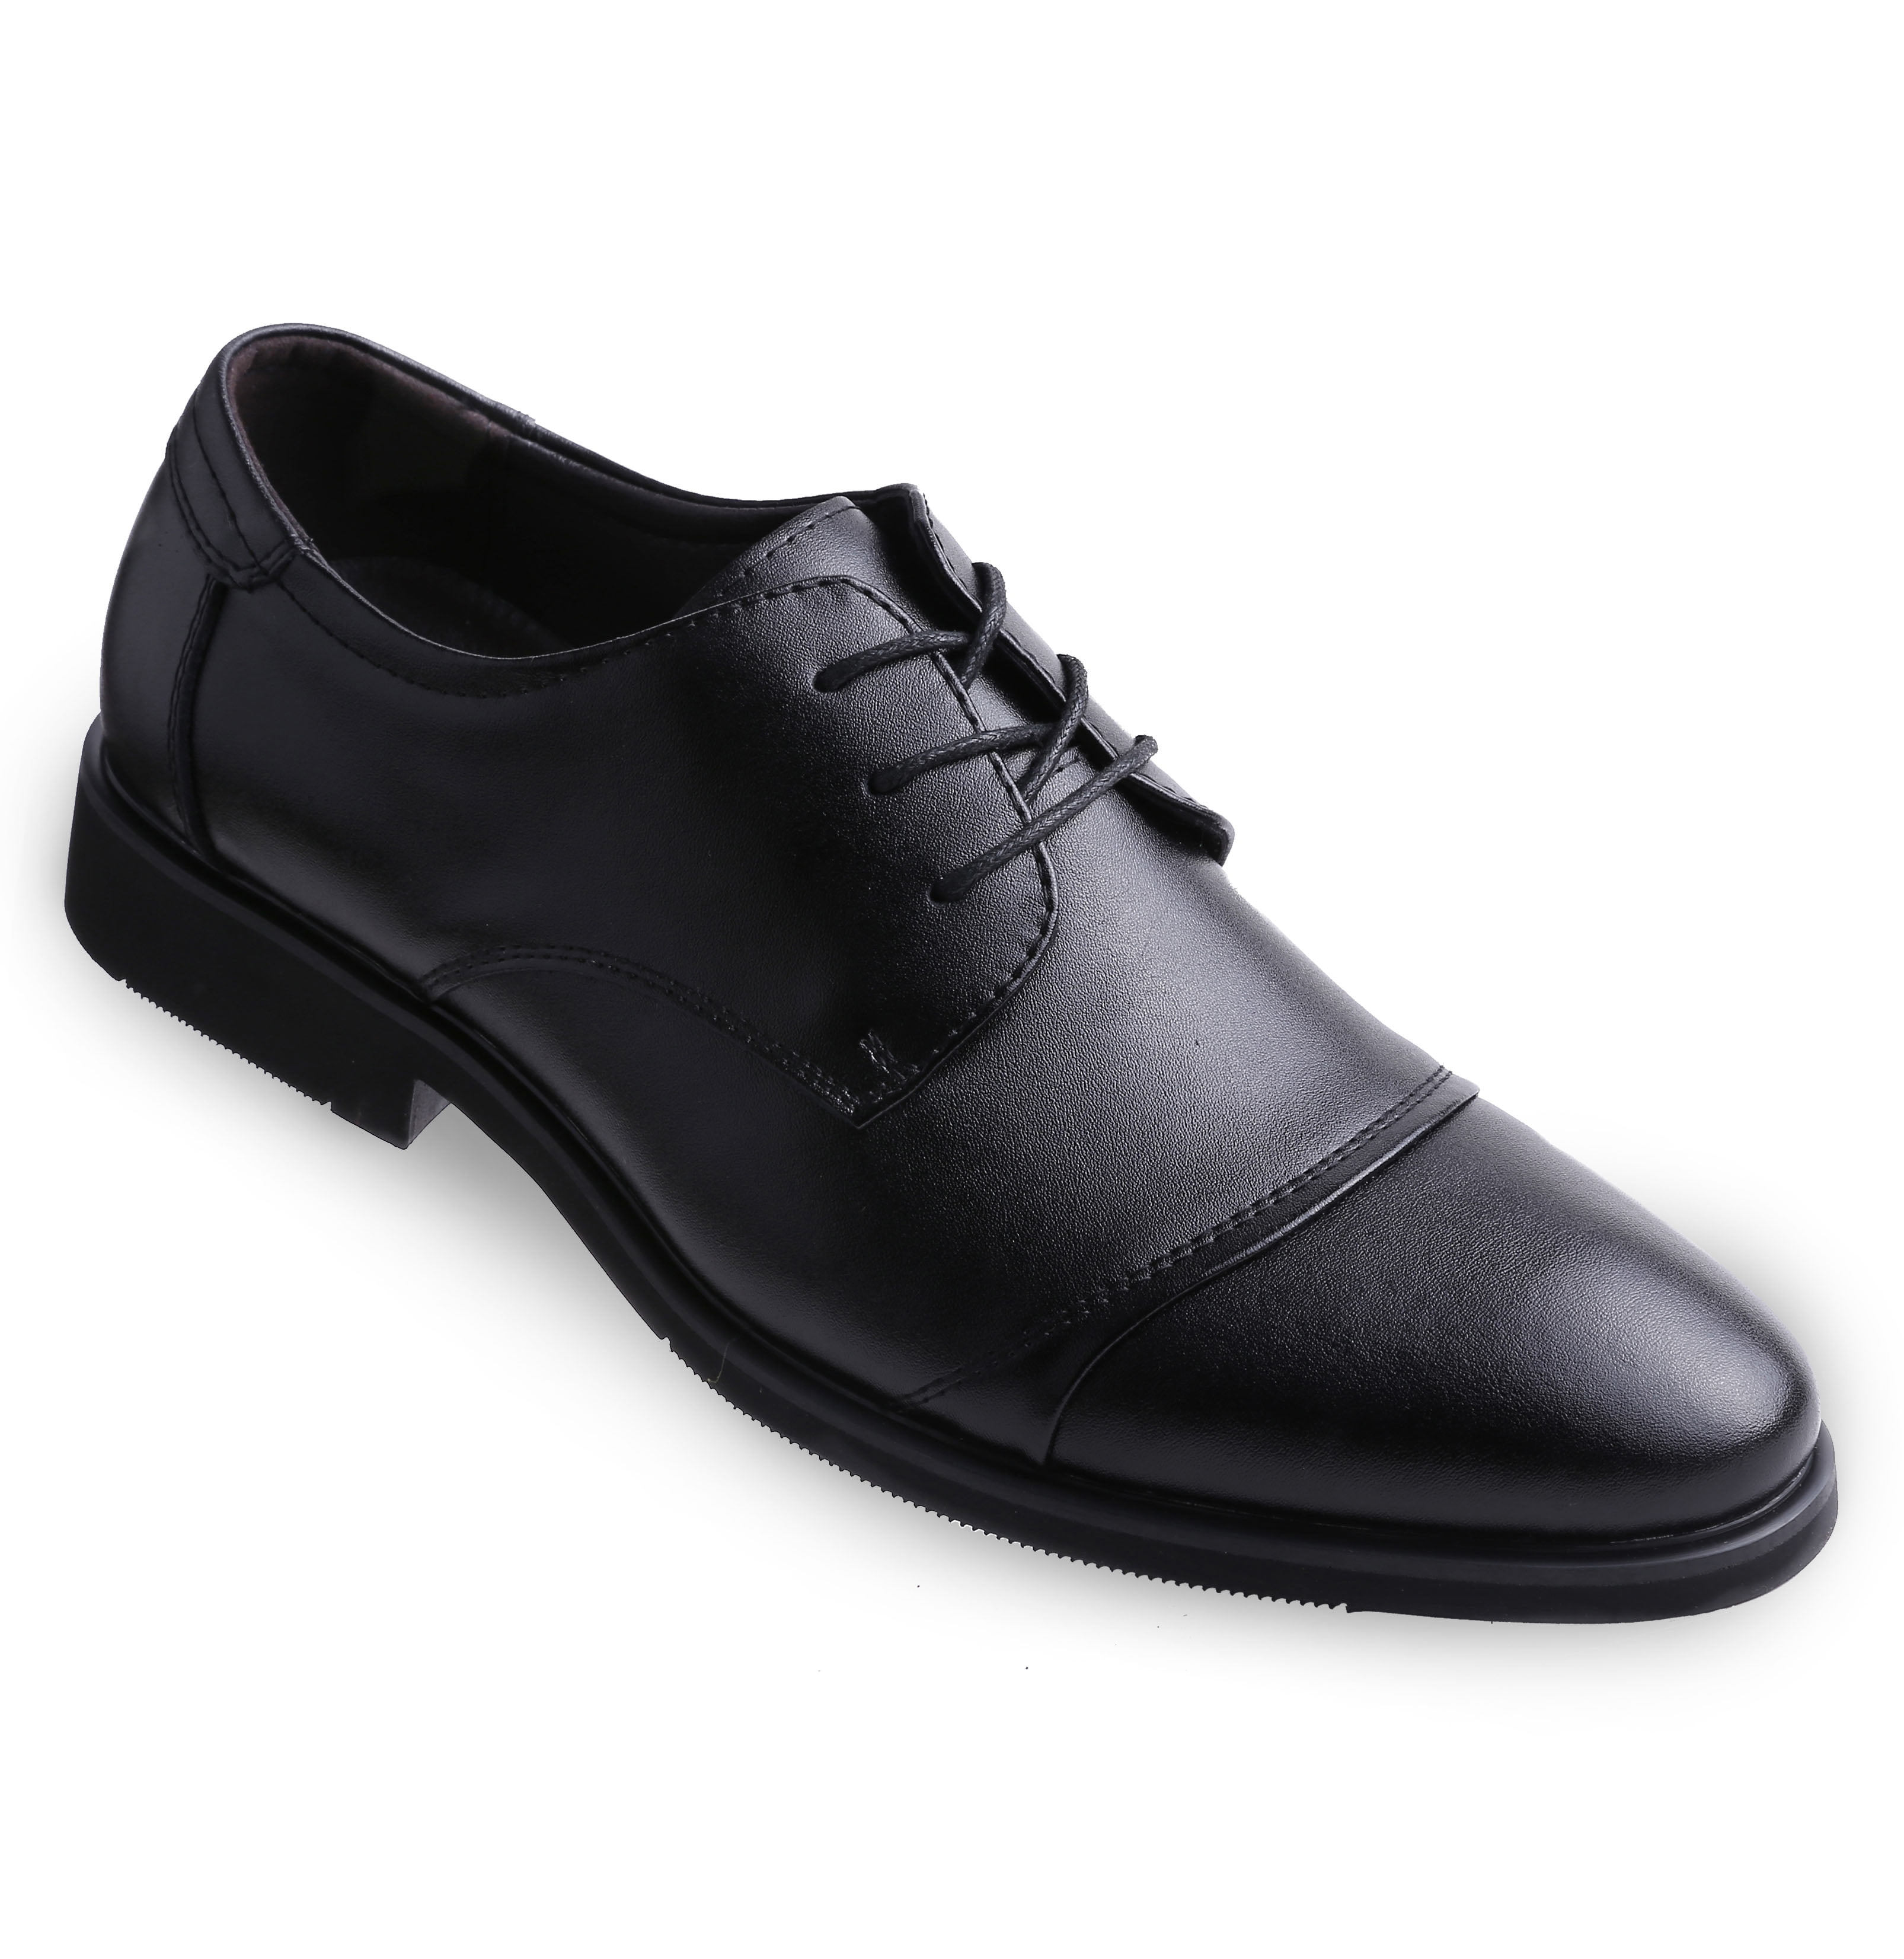 leather cap toe oxford dress shoe